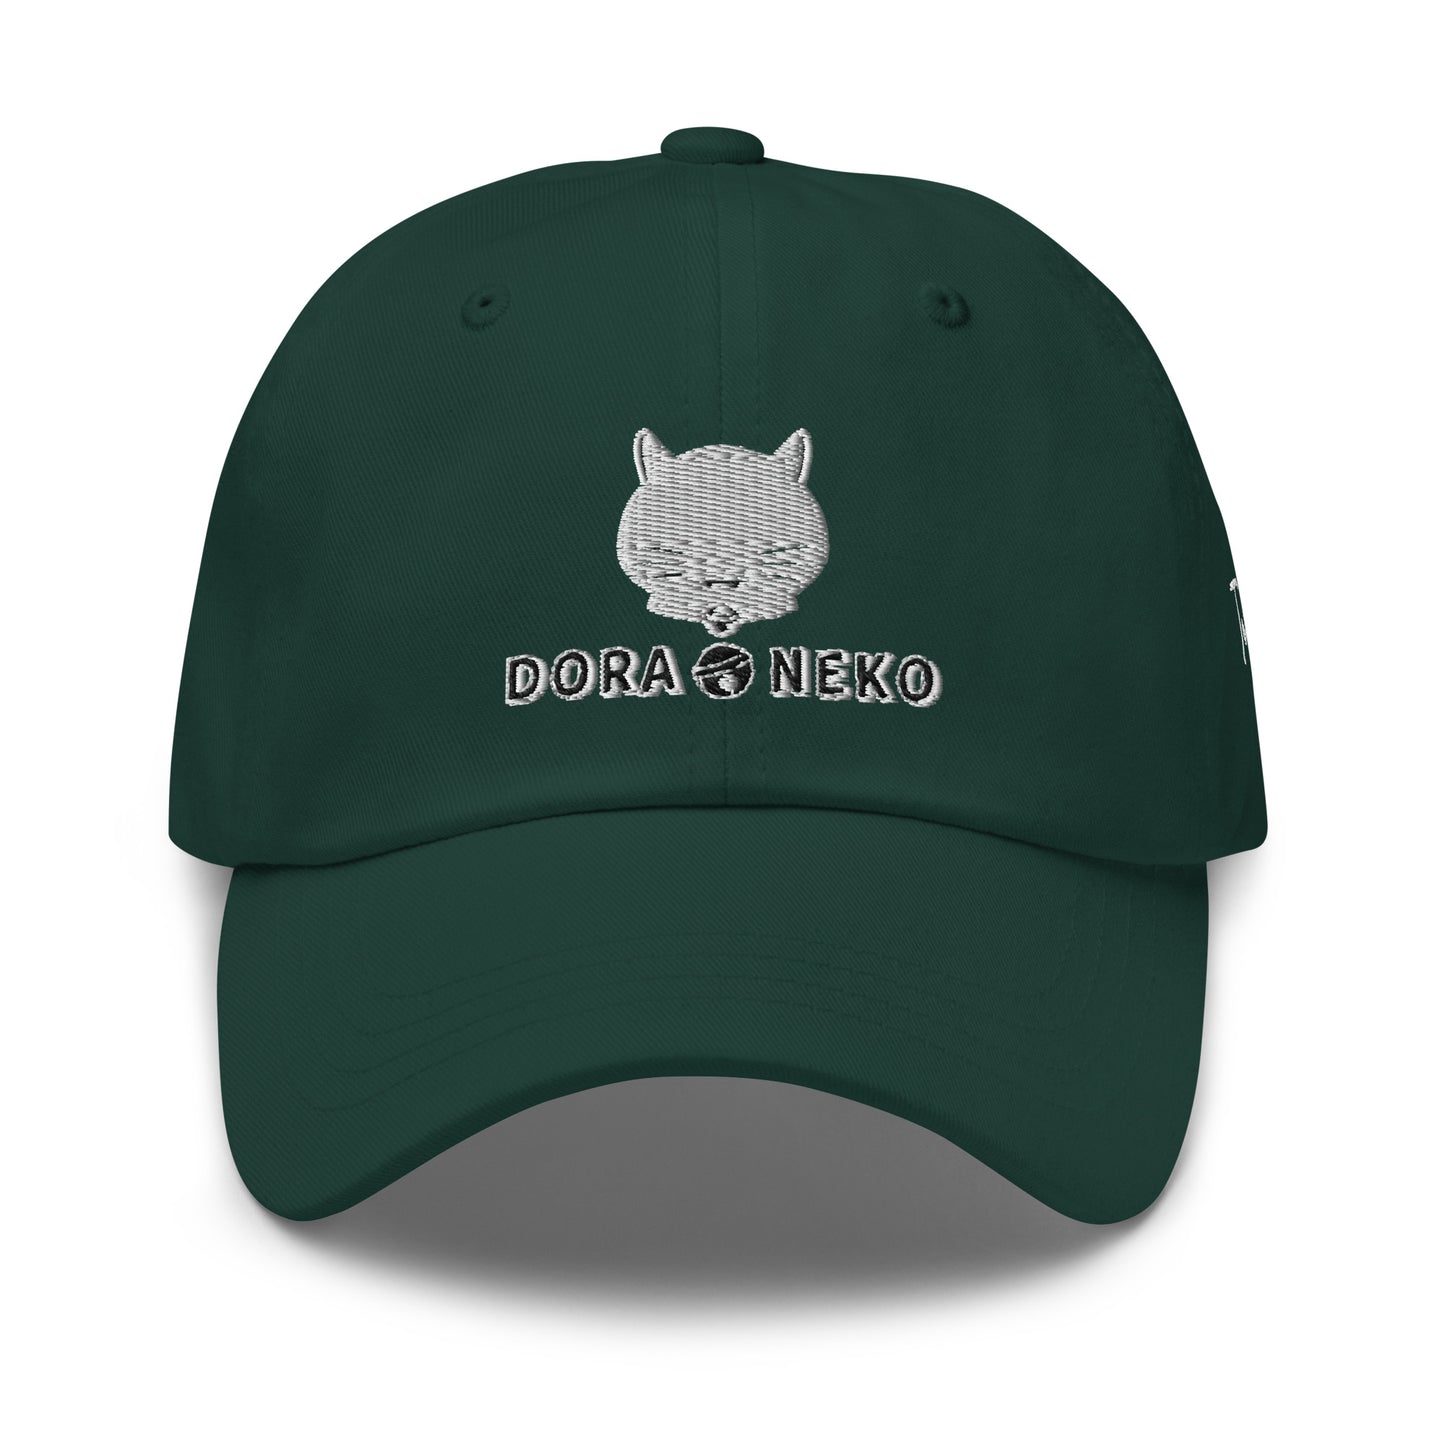 XCROSS DASH×TOMATO KETCHUP DORANEKO ORIGINAL DESIGN  | Classic Dad hat  | 刺繍ロゴ 6colors